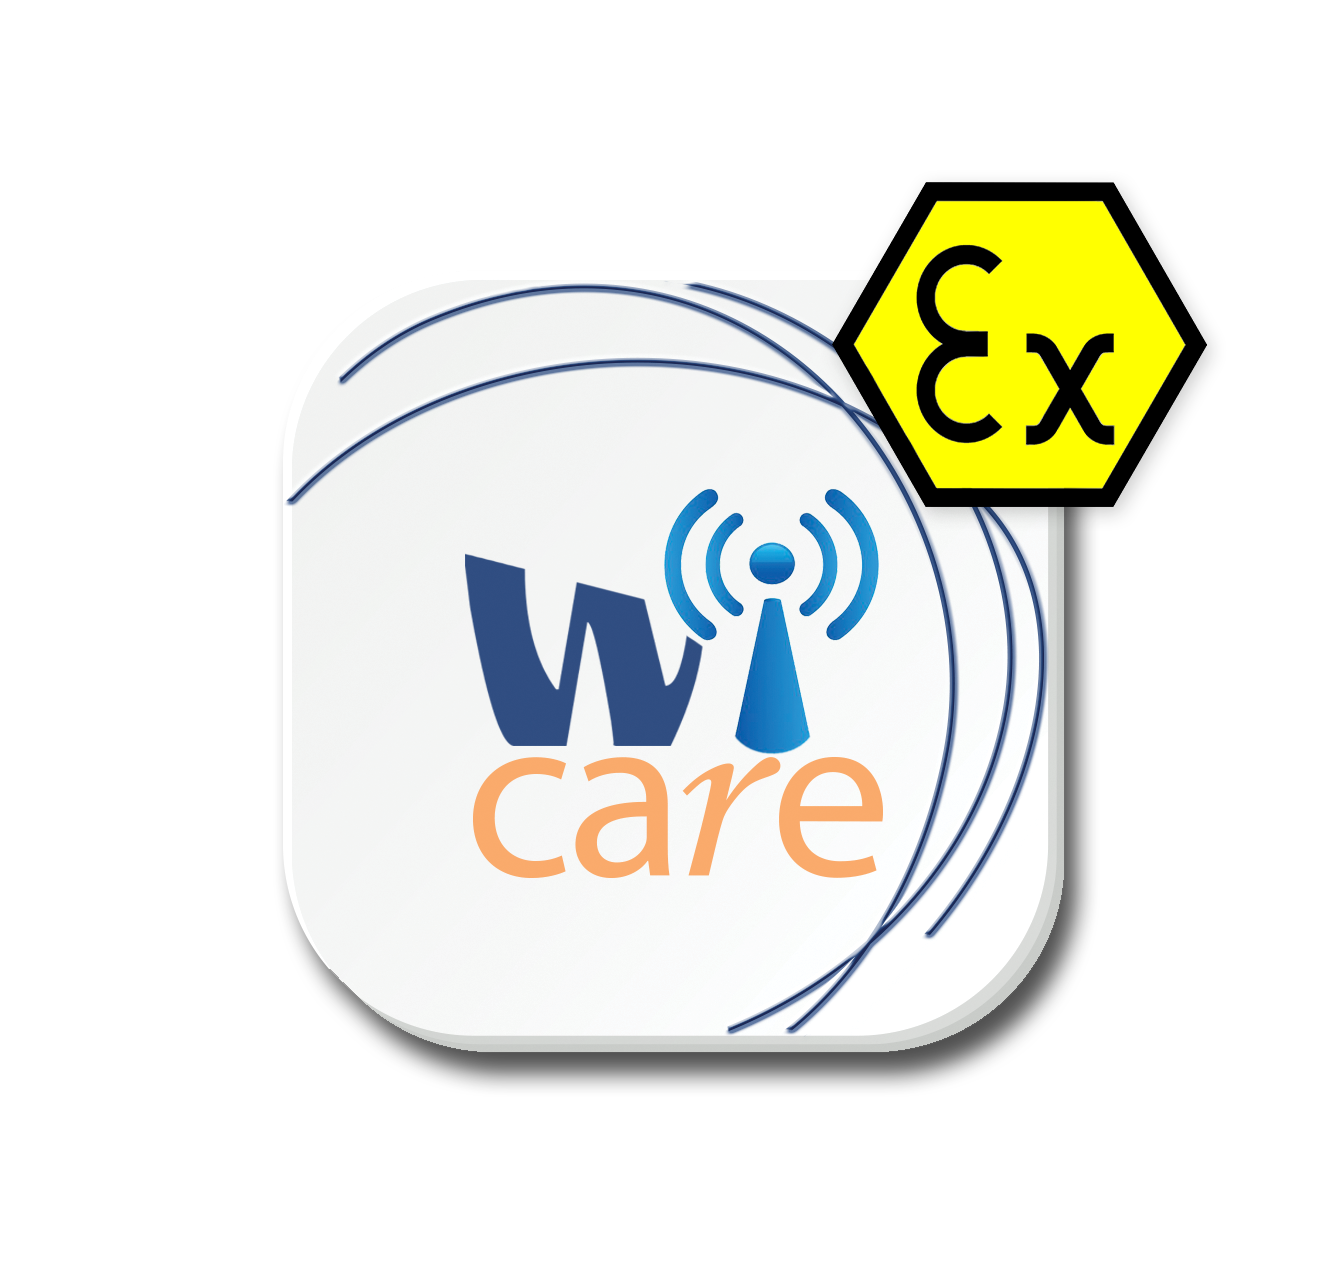 Wi-care_logo-Atex-ce1315